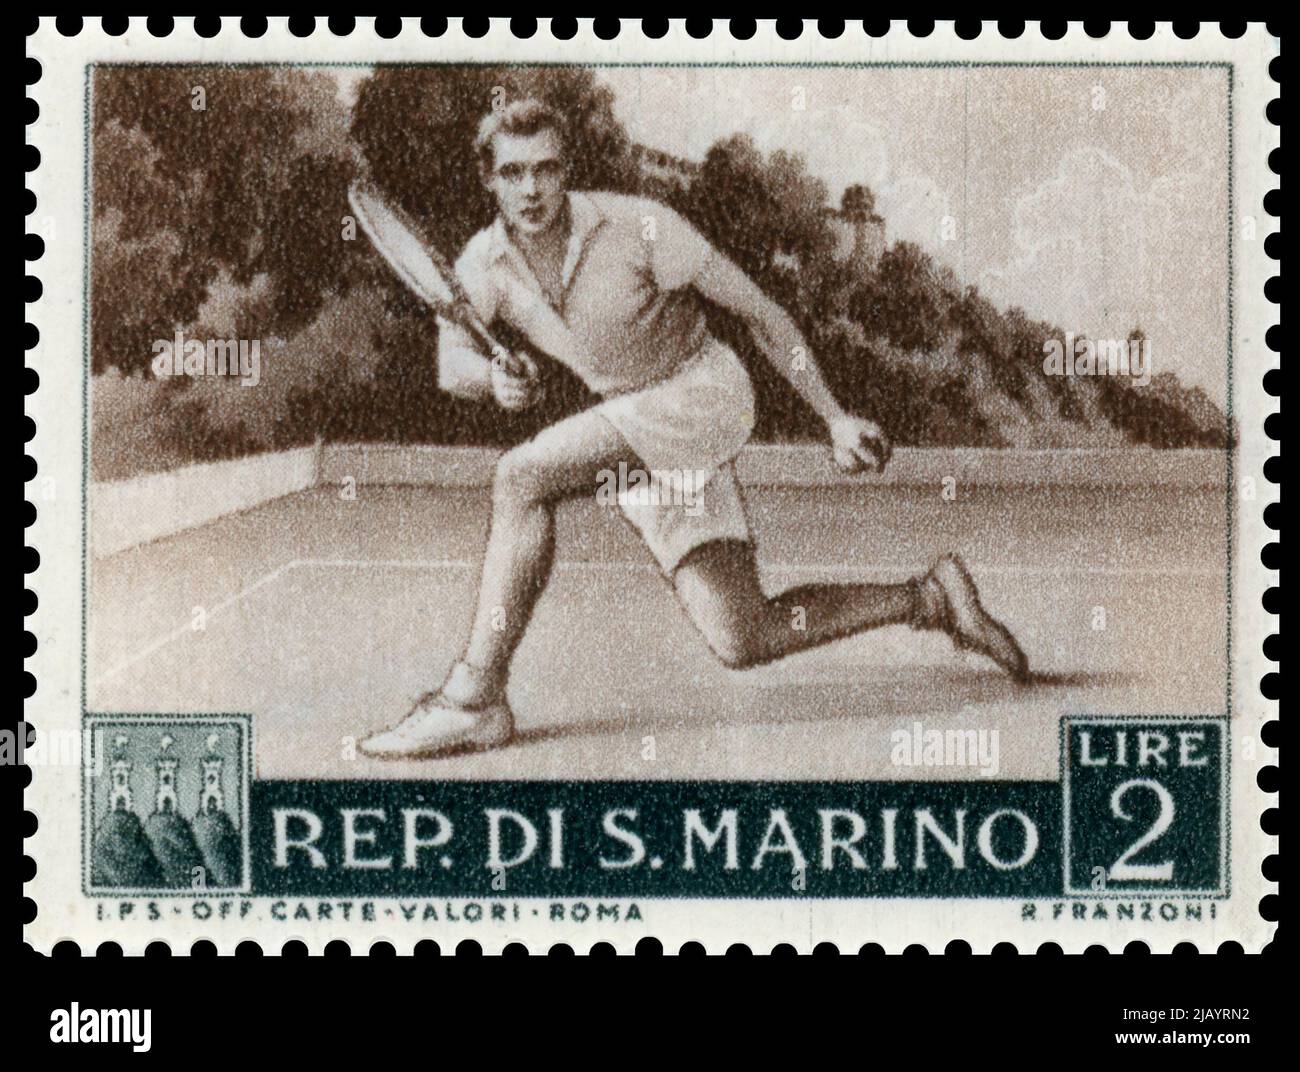 Tennis player depicted on San Marino postage stamp. Stock Photo